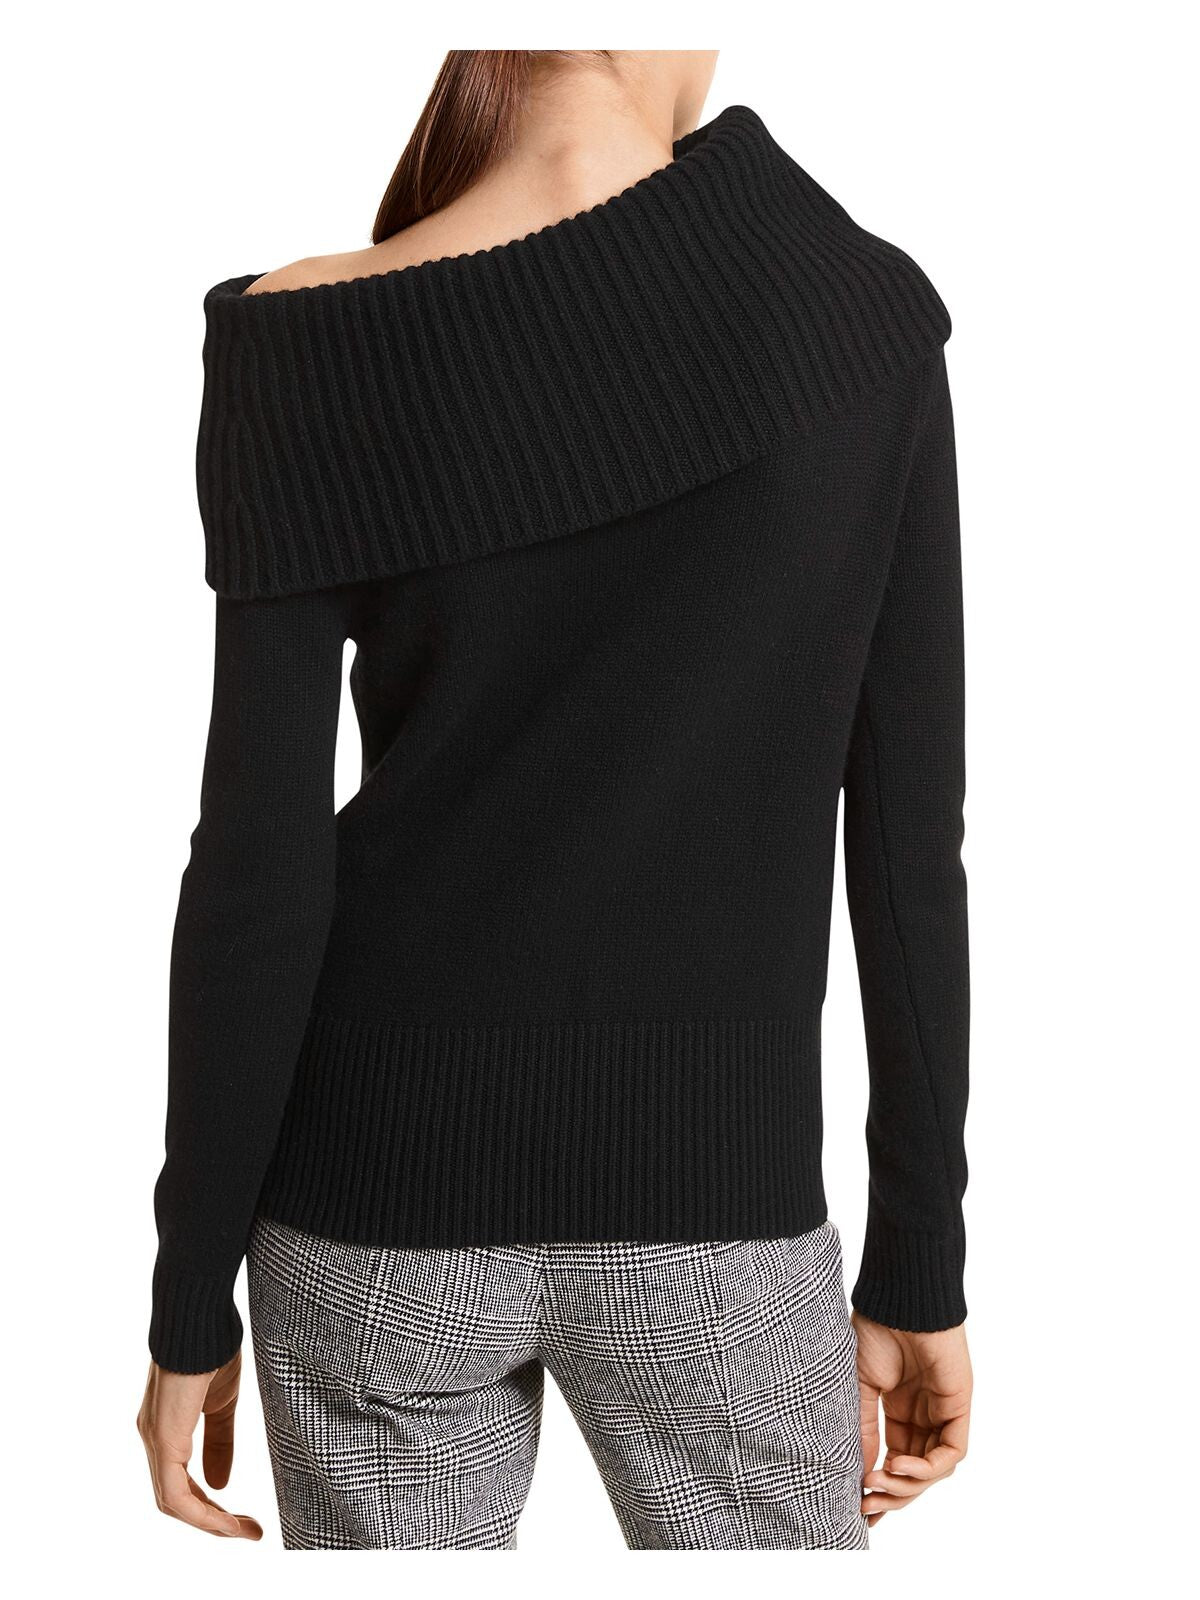 MICHAEL KORS Womens Black Ribbed Asymmetric Foldover Collar Long Sleeve Sweater M